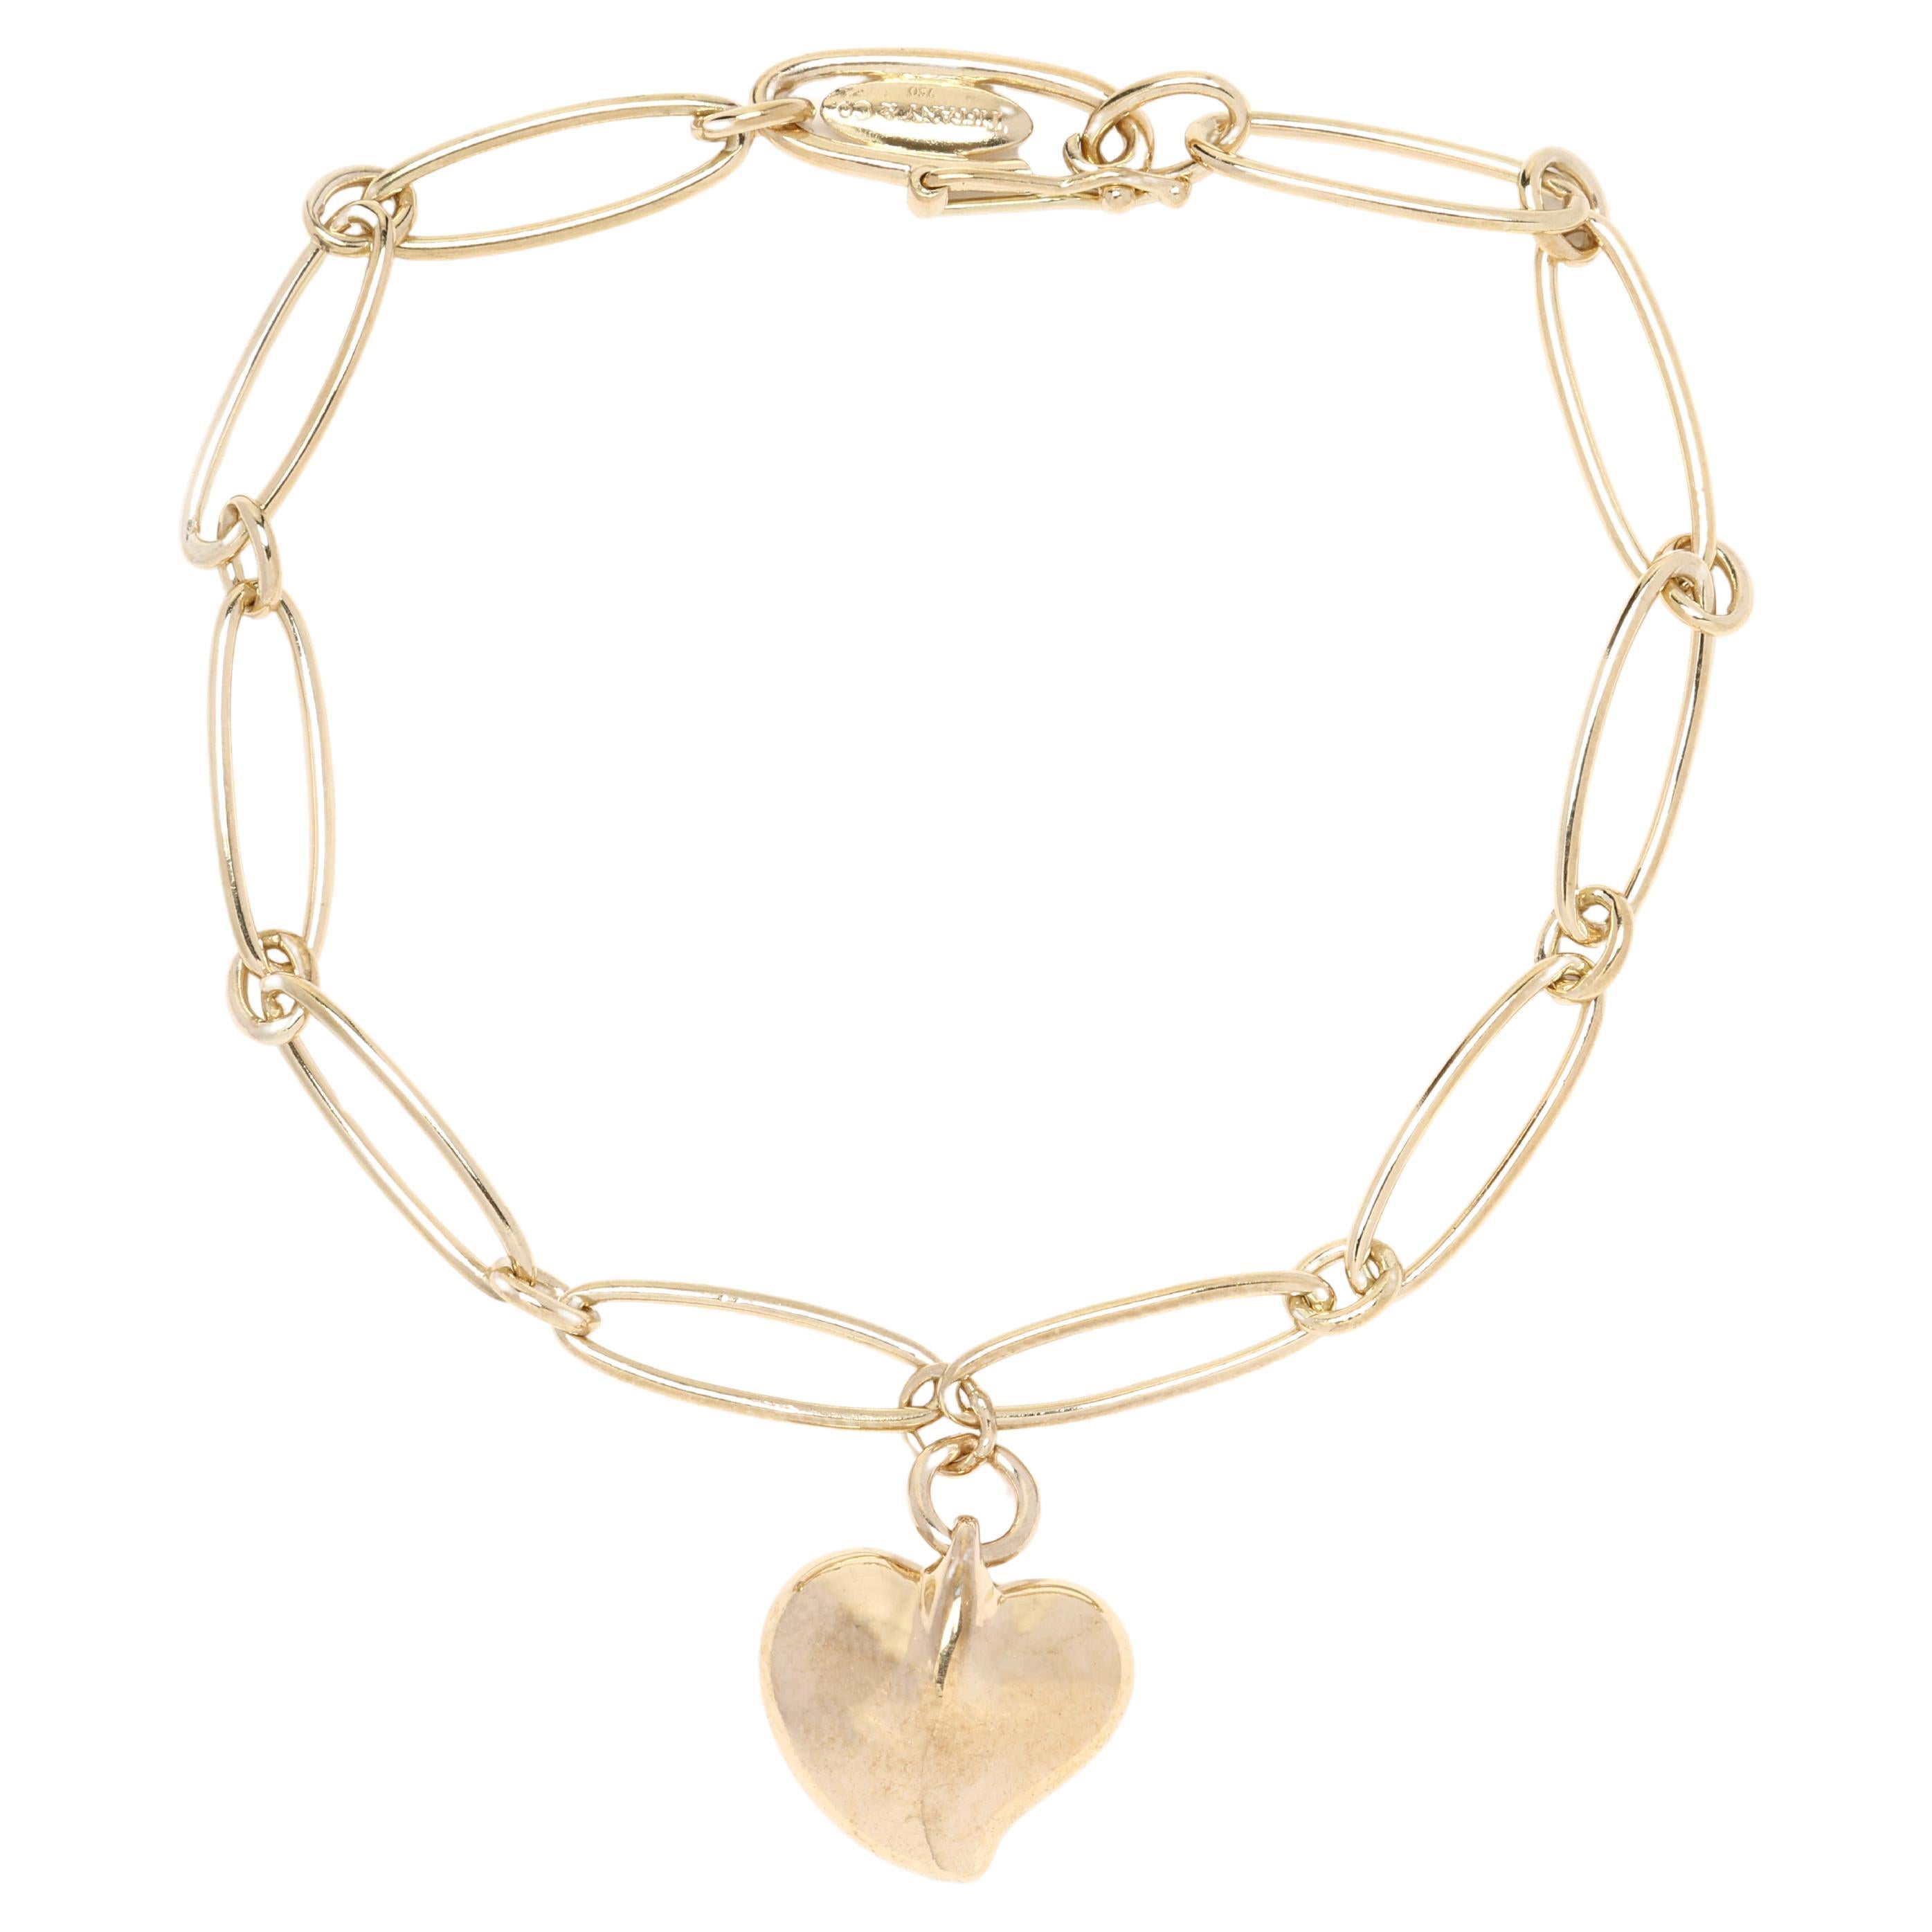 Tiffany & Co. Elsa Perreti Link Bracelet, 18k Yellow Gold, Heart Pendant, 7.5 In